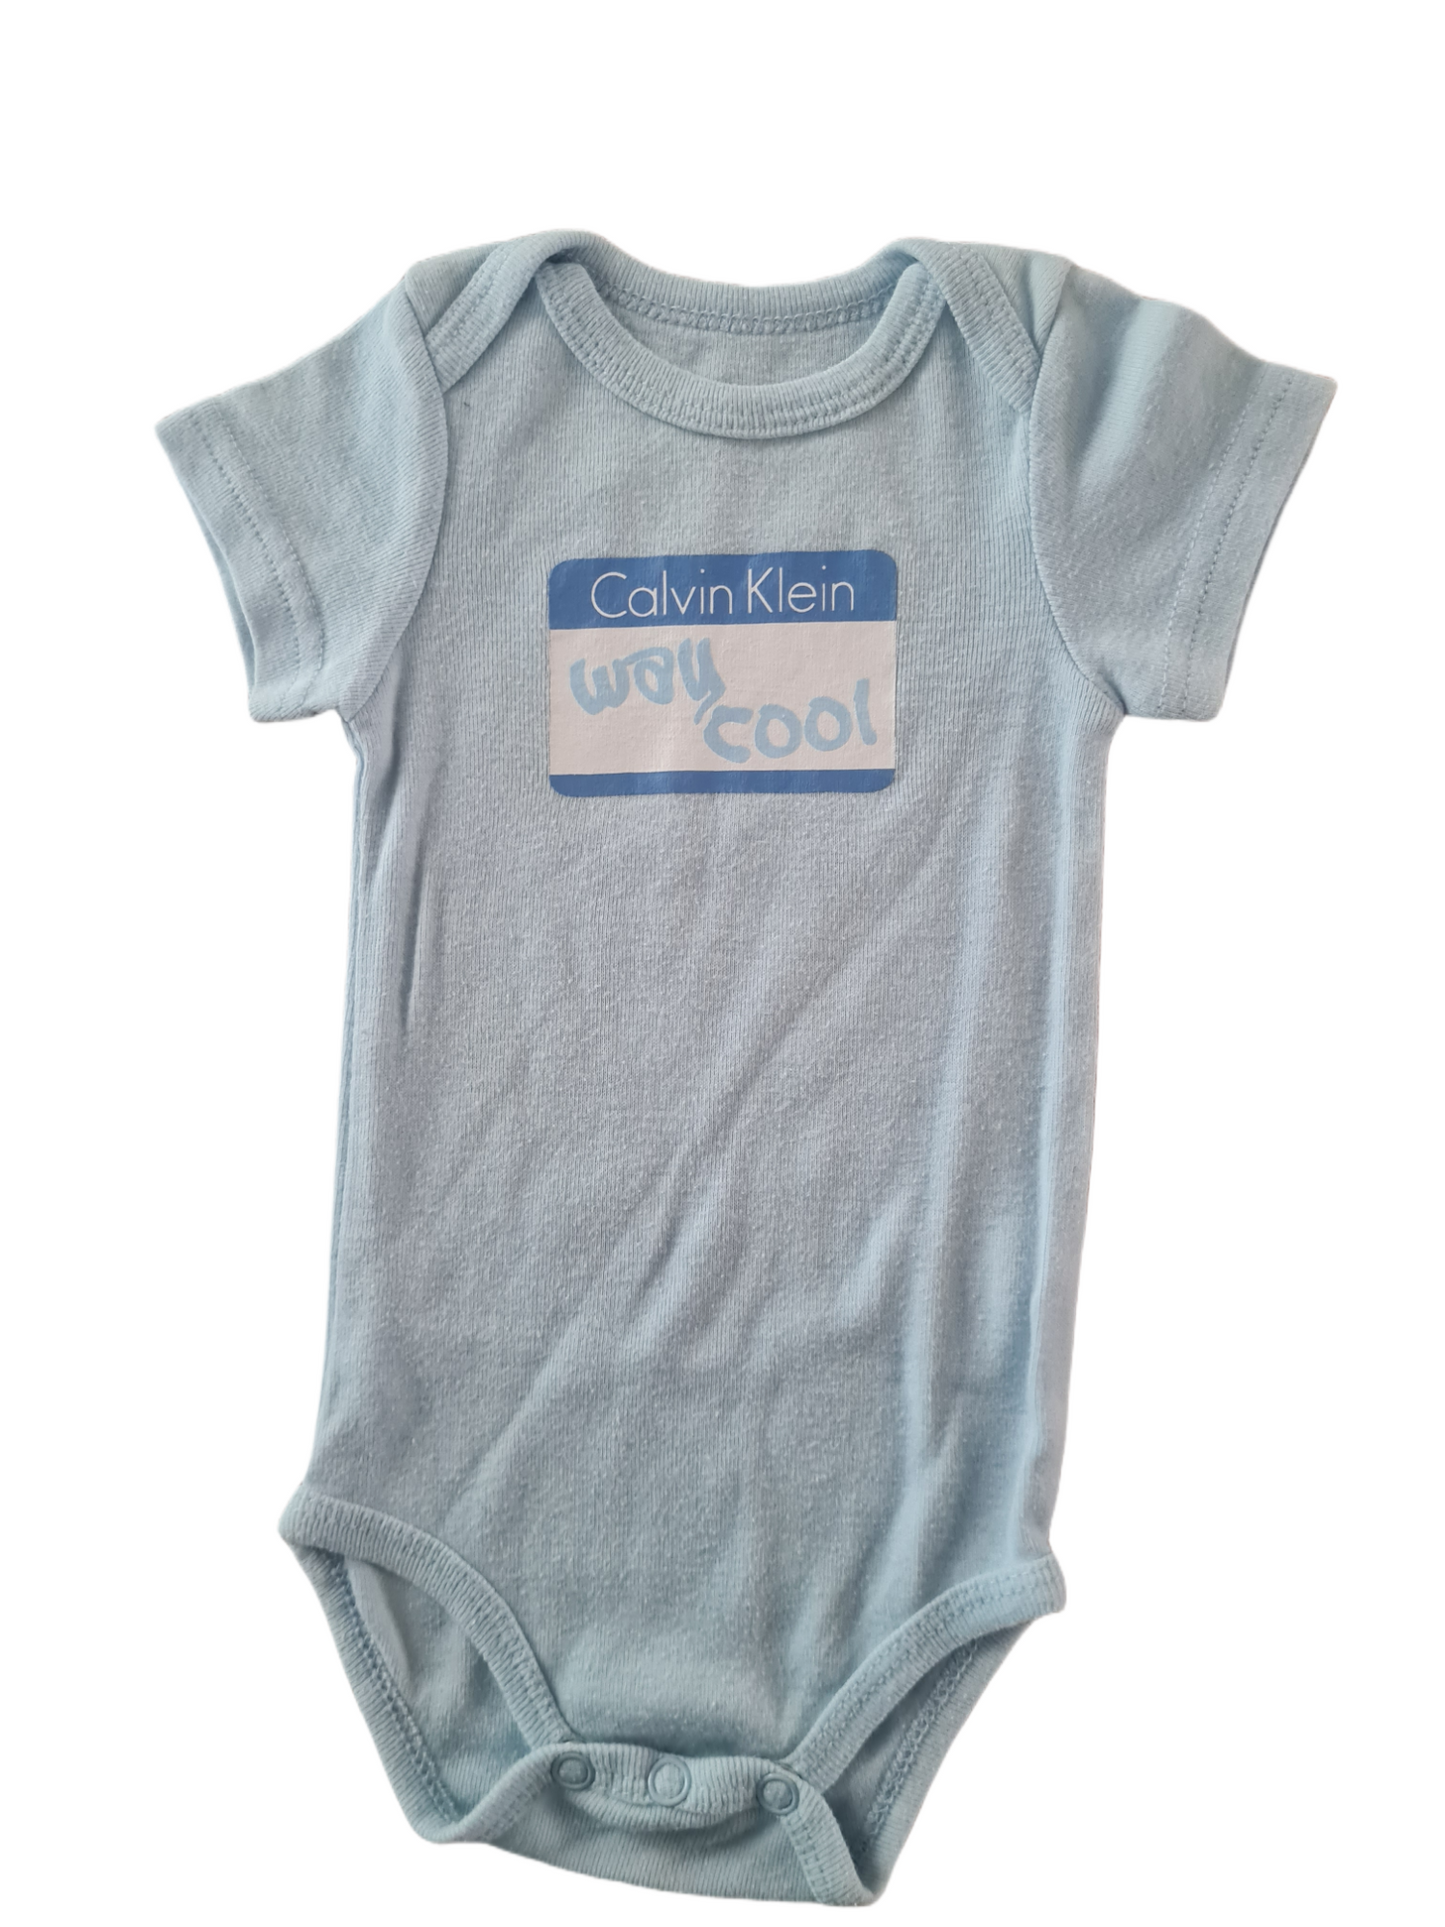 Calvin Klein Light Blue Short Baby Grow